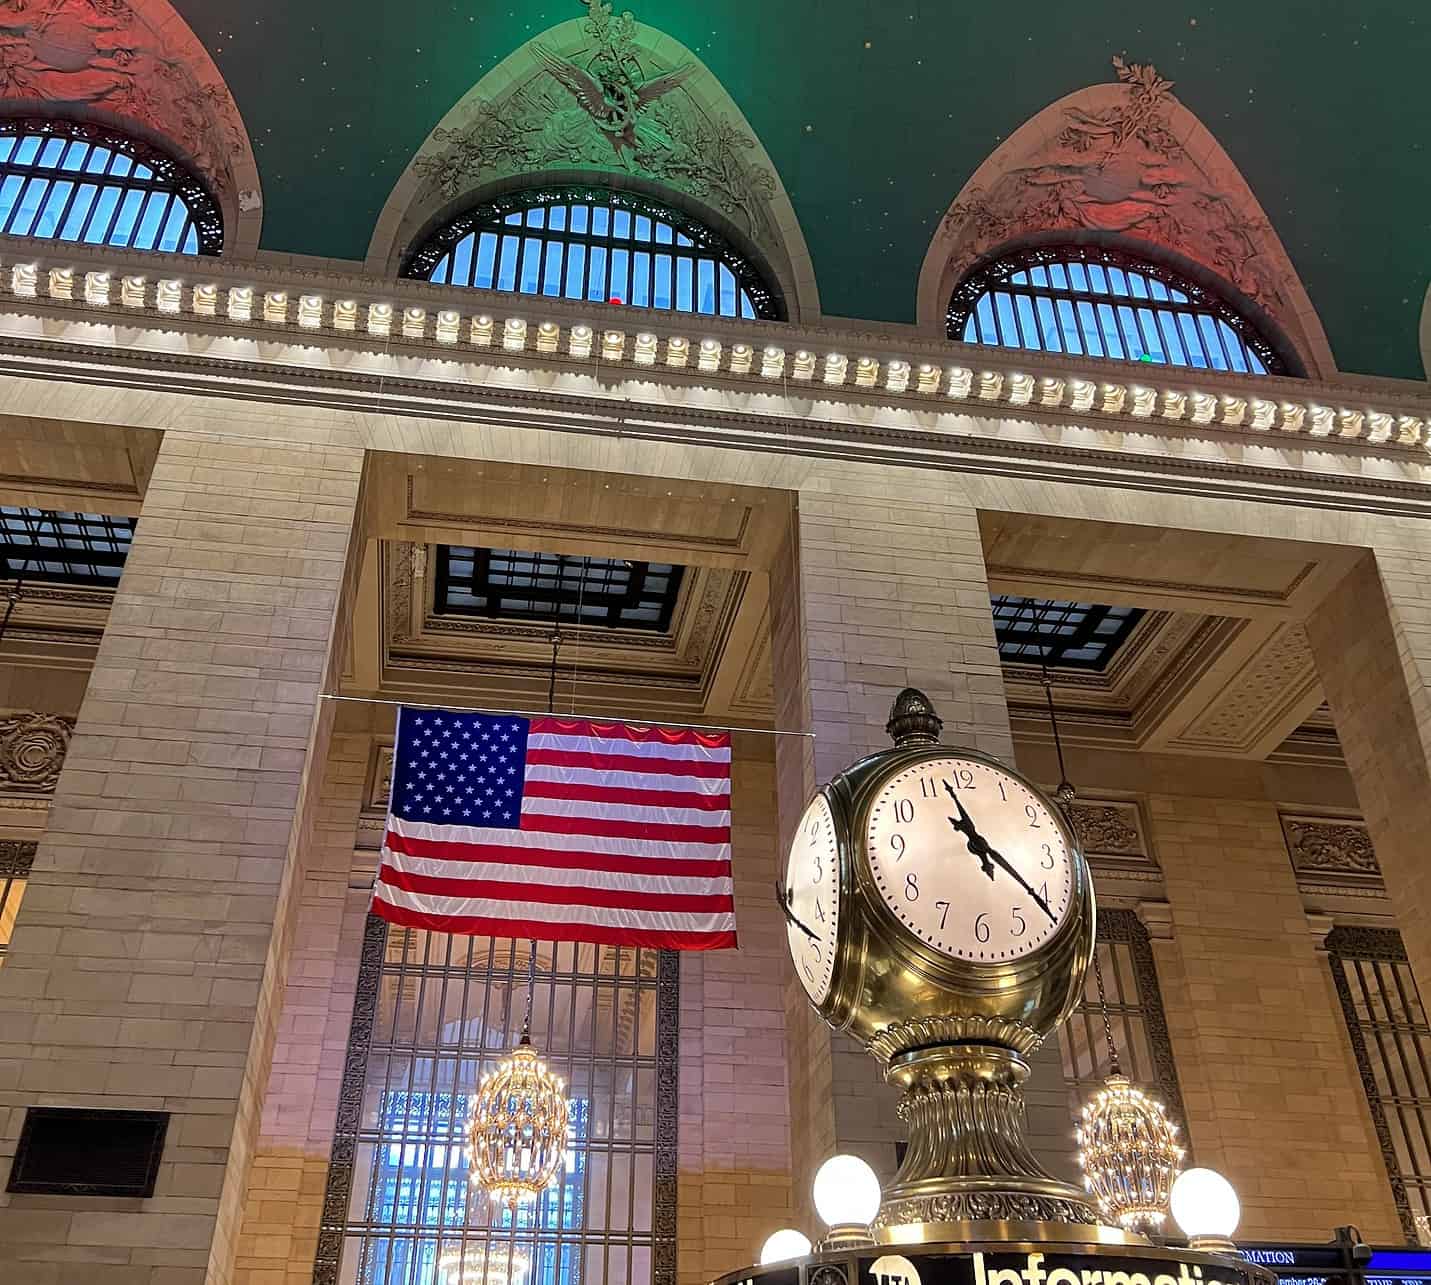 Das berühmte Grand Central Terminal aus dem Jahr 1913 in New York City, USA.